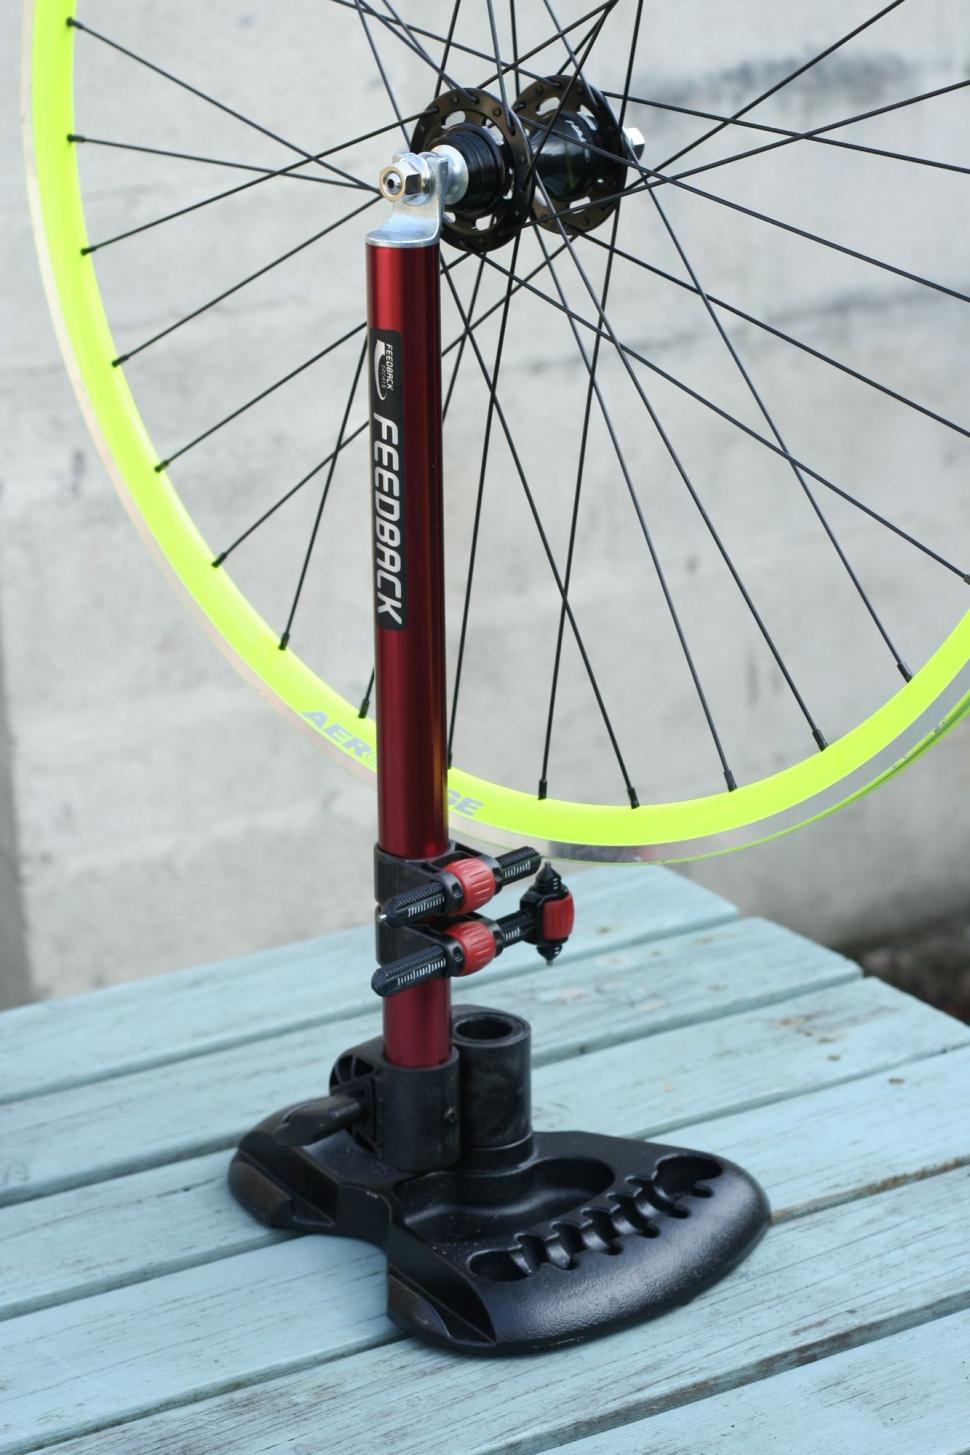 truing a bike wheel